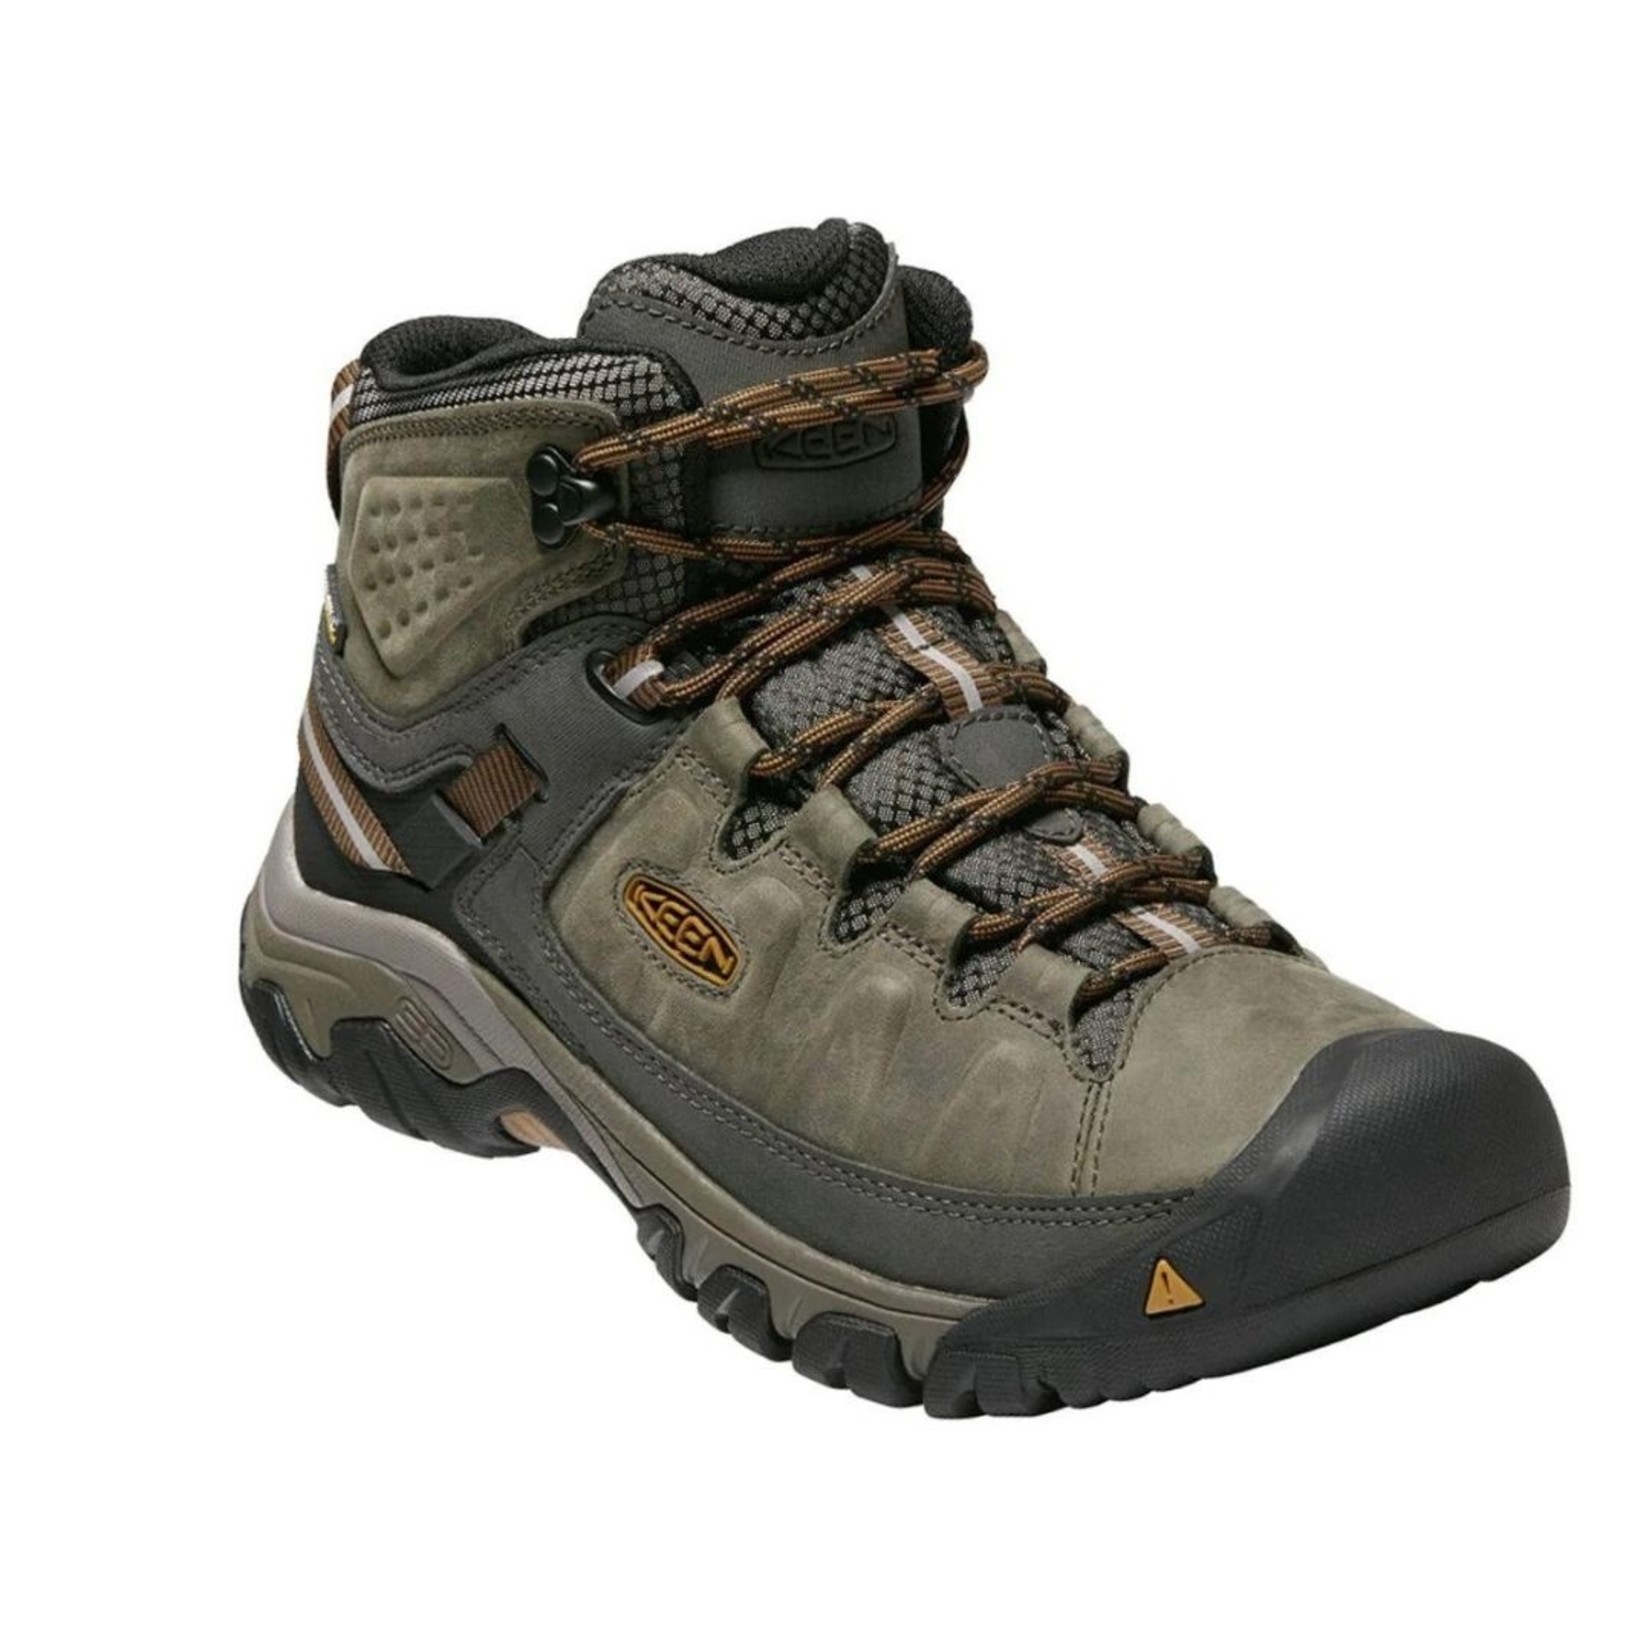 Keen Targhee III Mid WP Men’s Hiking Boots - Shippy Shoes